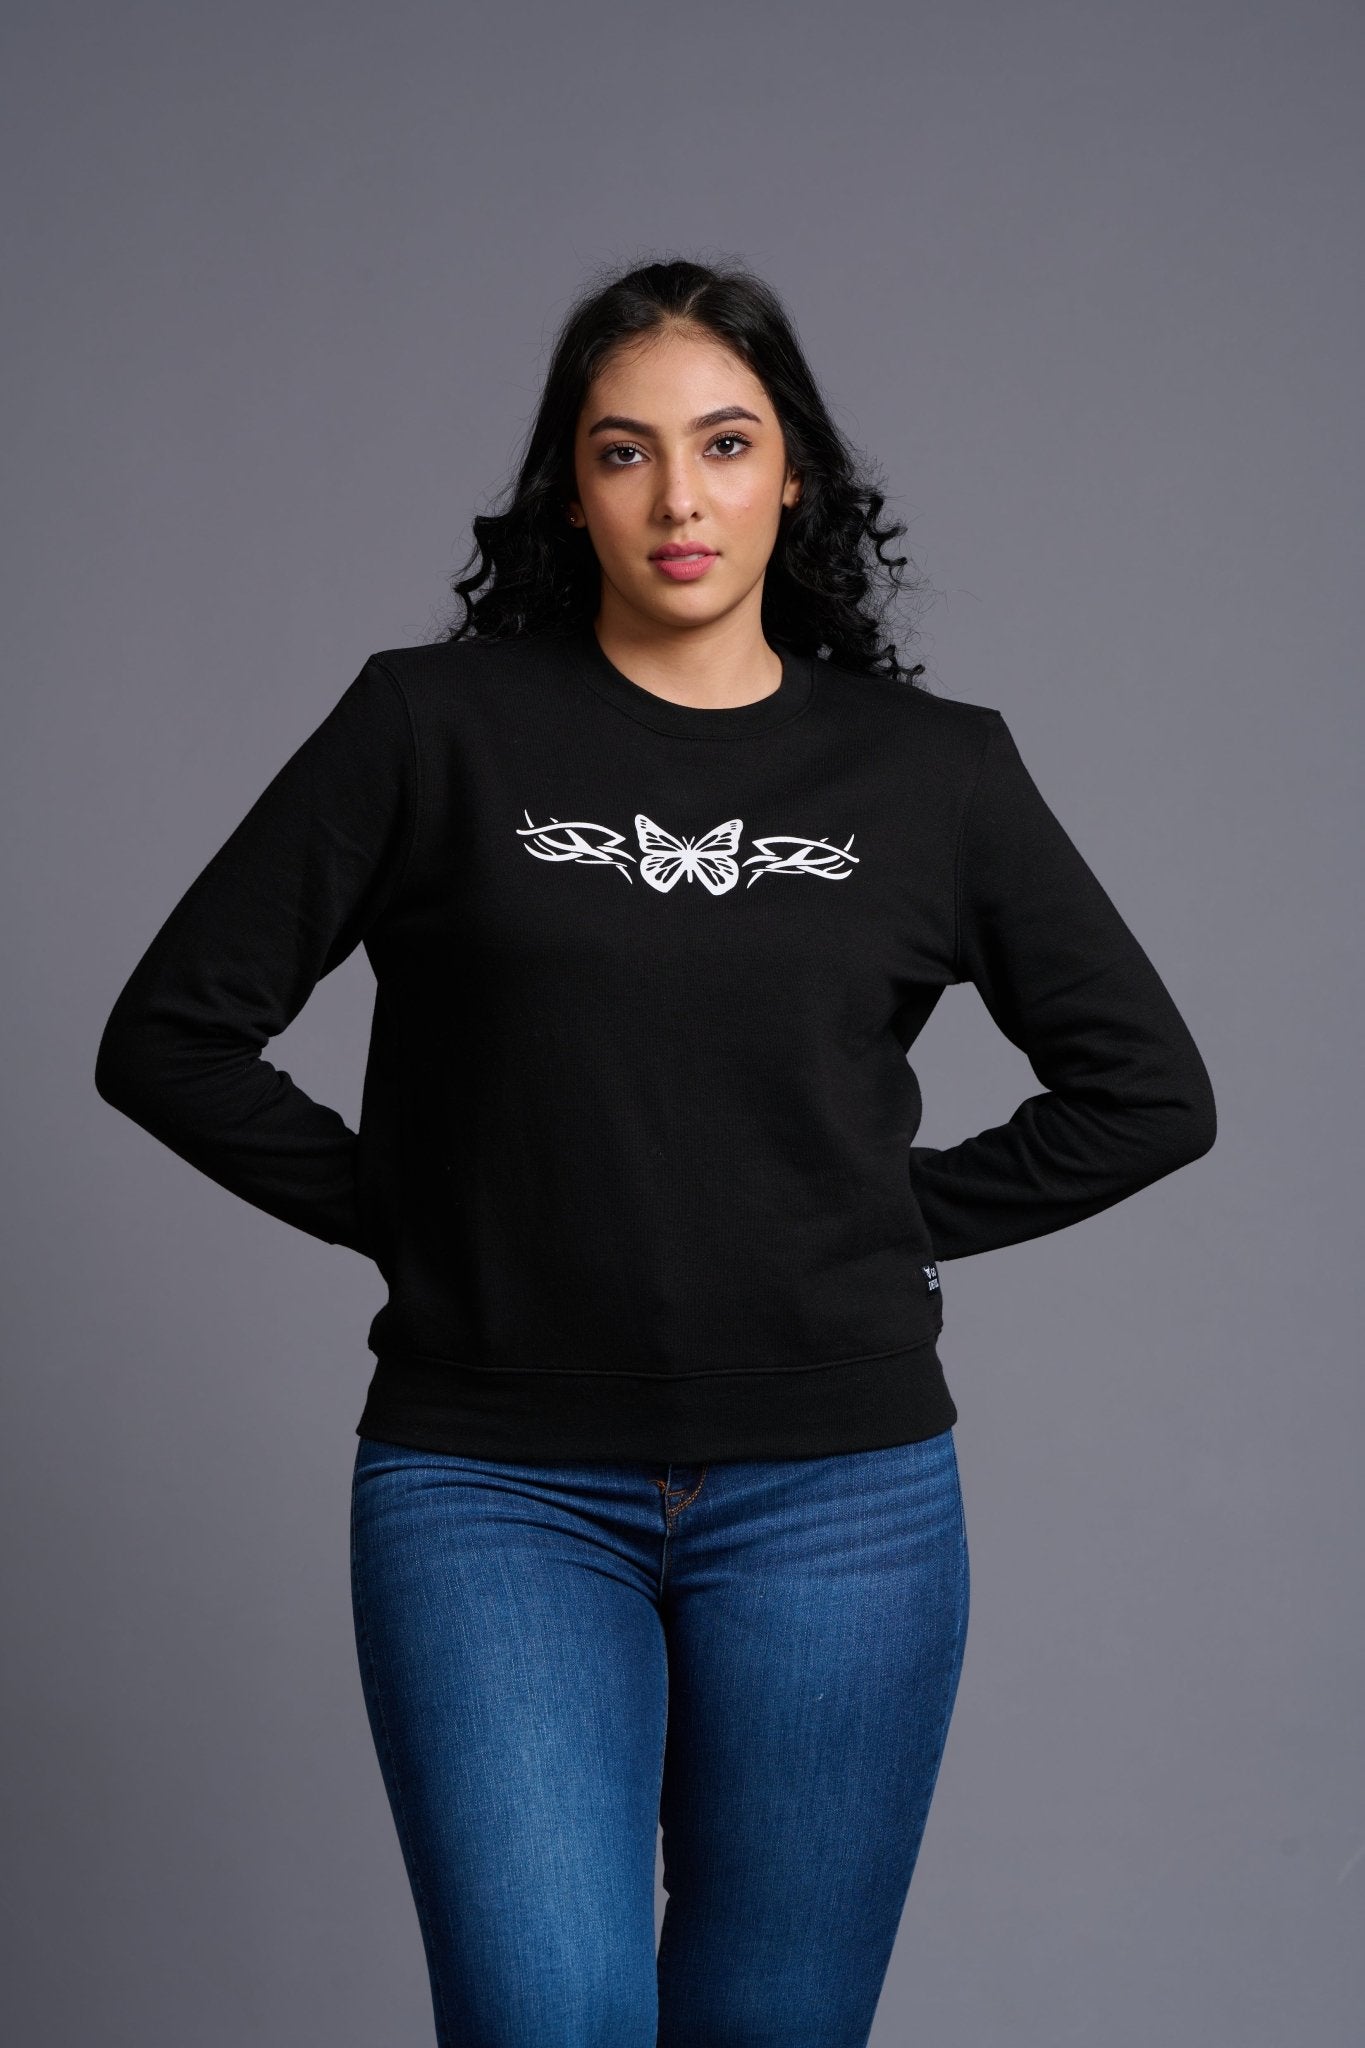 Antisocial Butterfly Printed Black Sweatshirt for Women by Go Devil - Go Devil